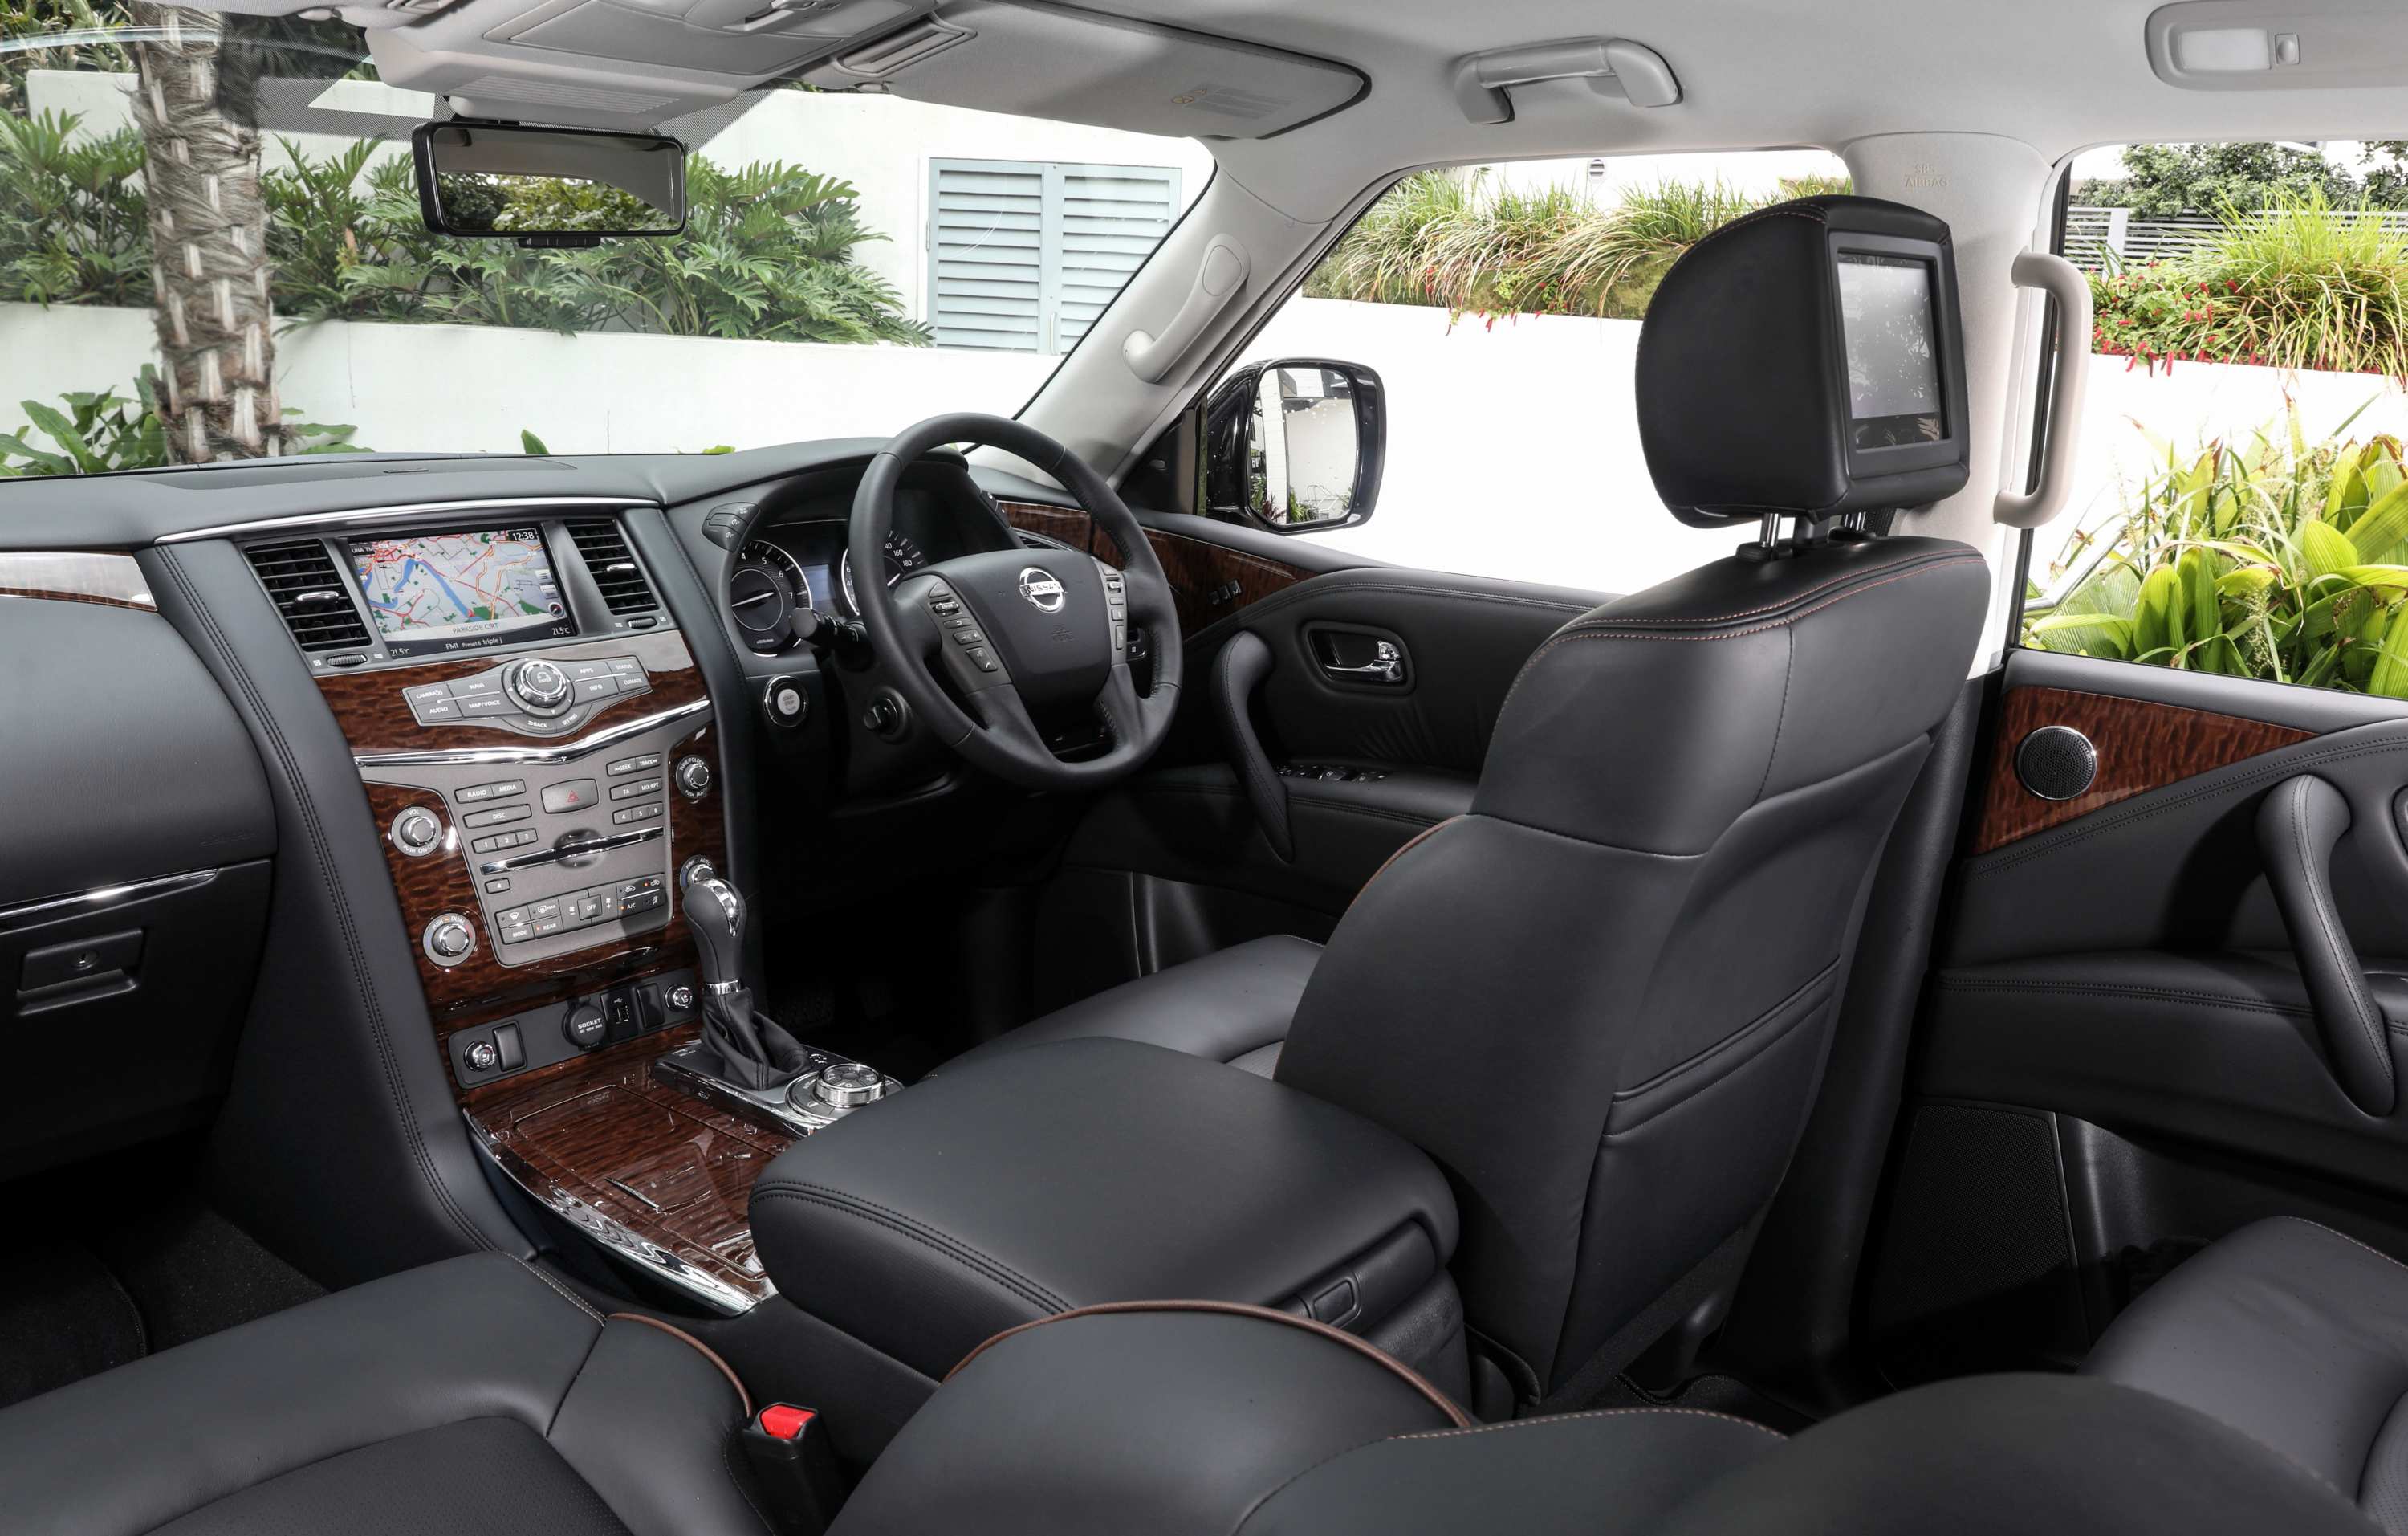 2021 Nissan Patrol Ti-L front interior